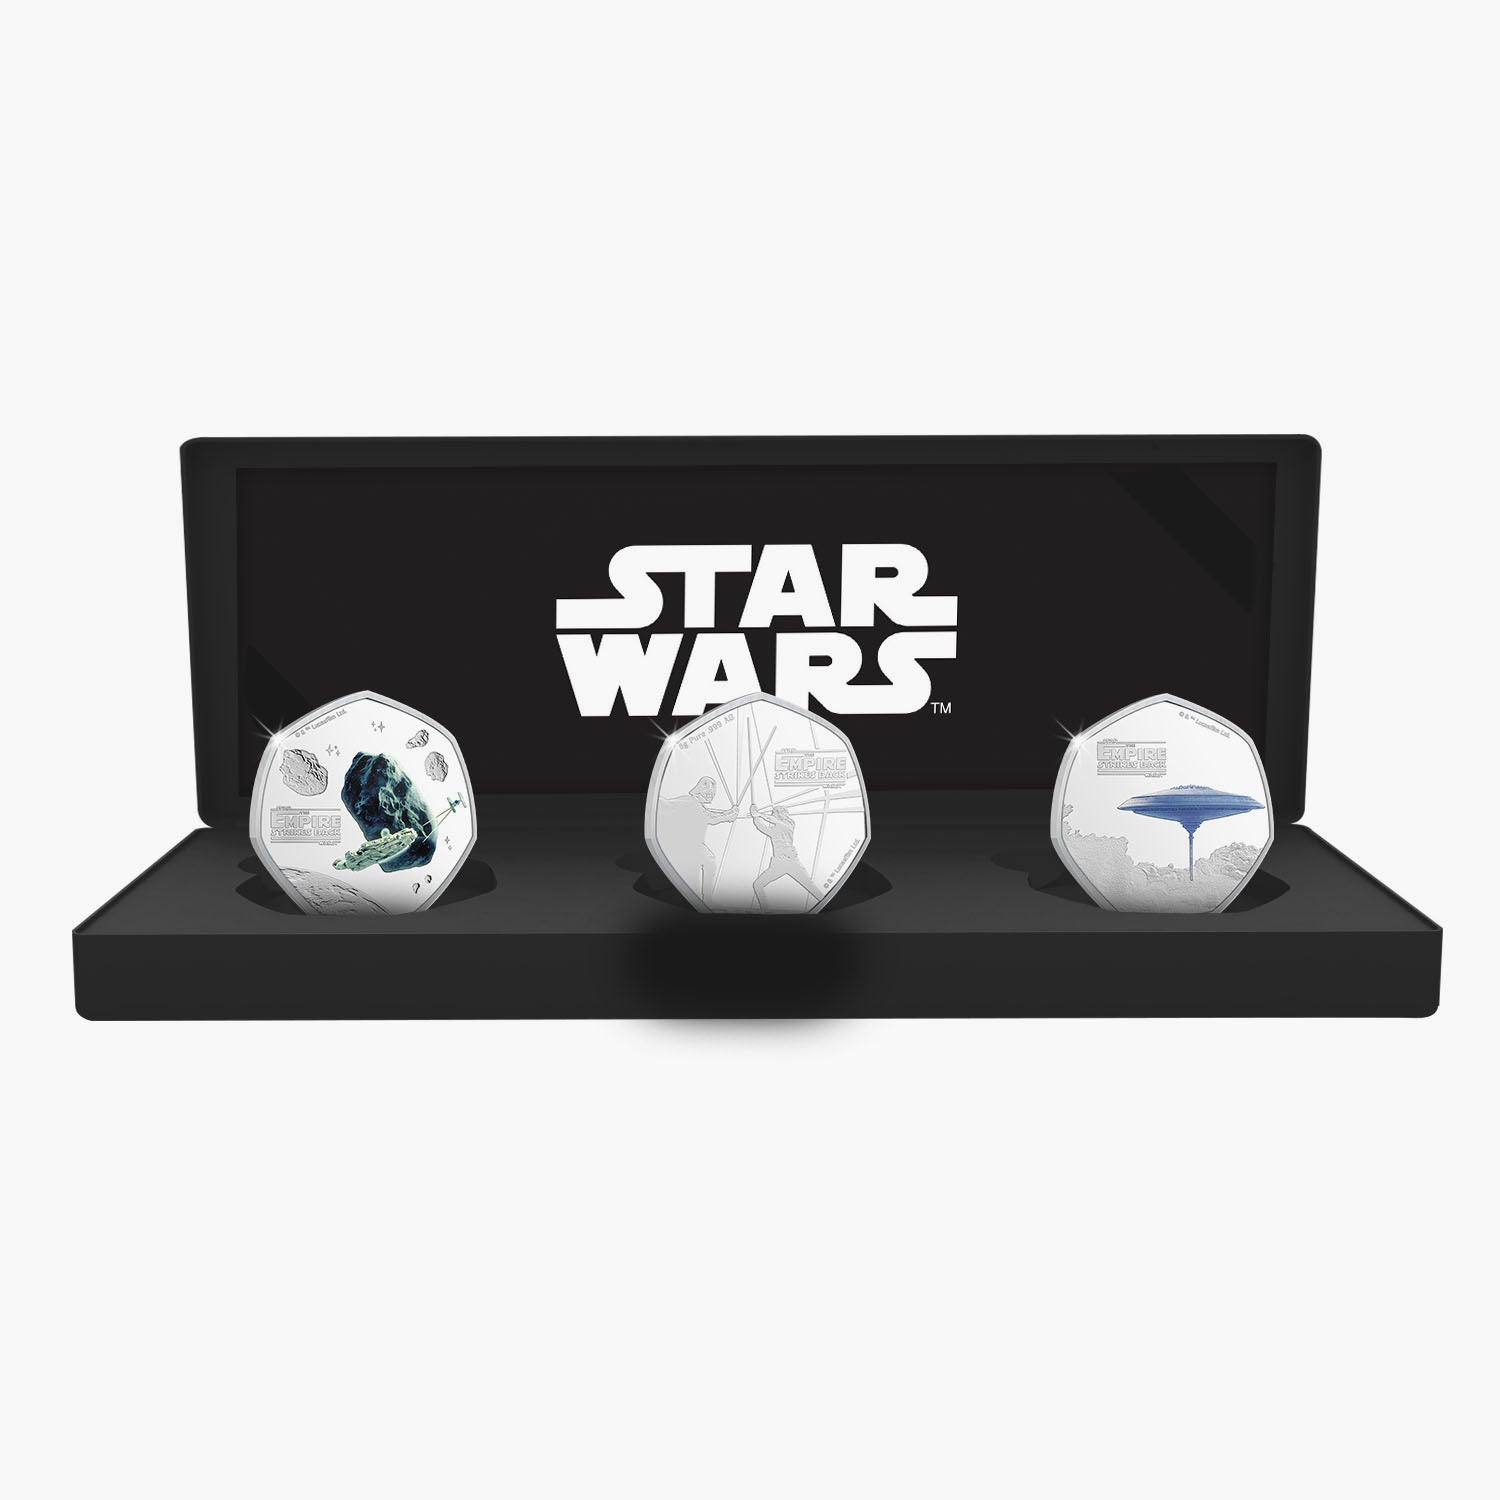 The Star Wars Empire Strikes Back 40th Anniversary Silver Box Set